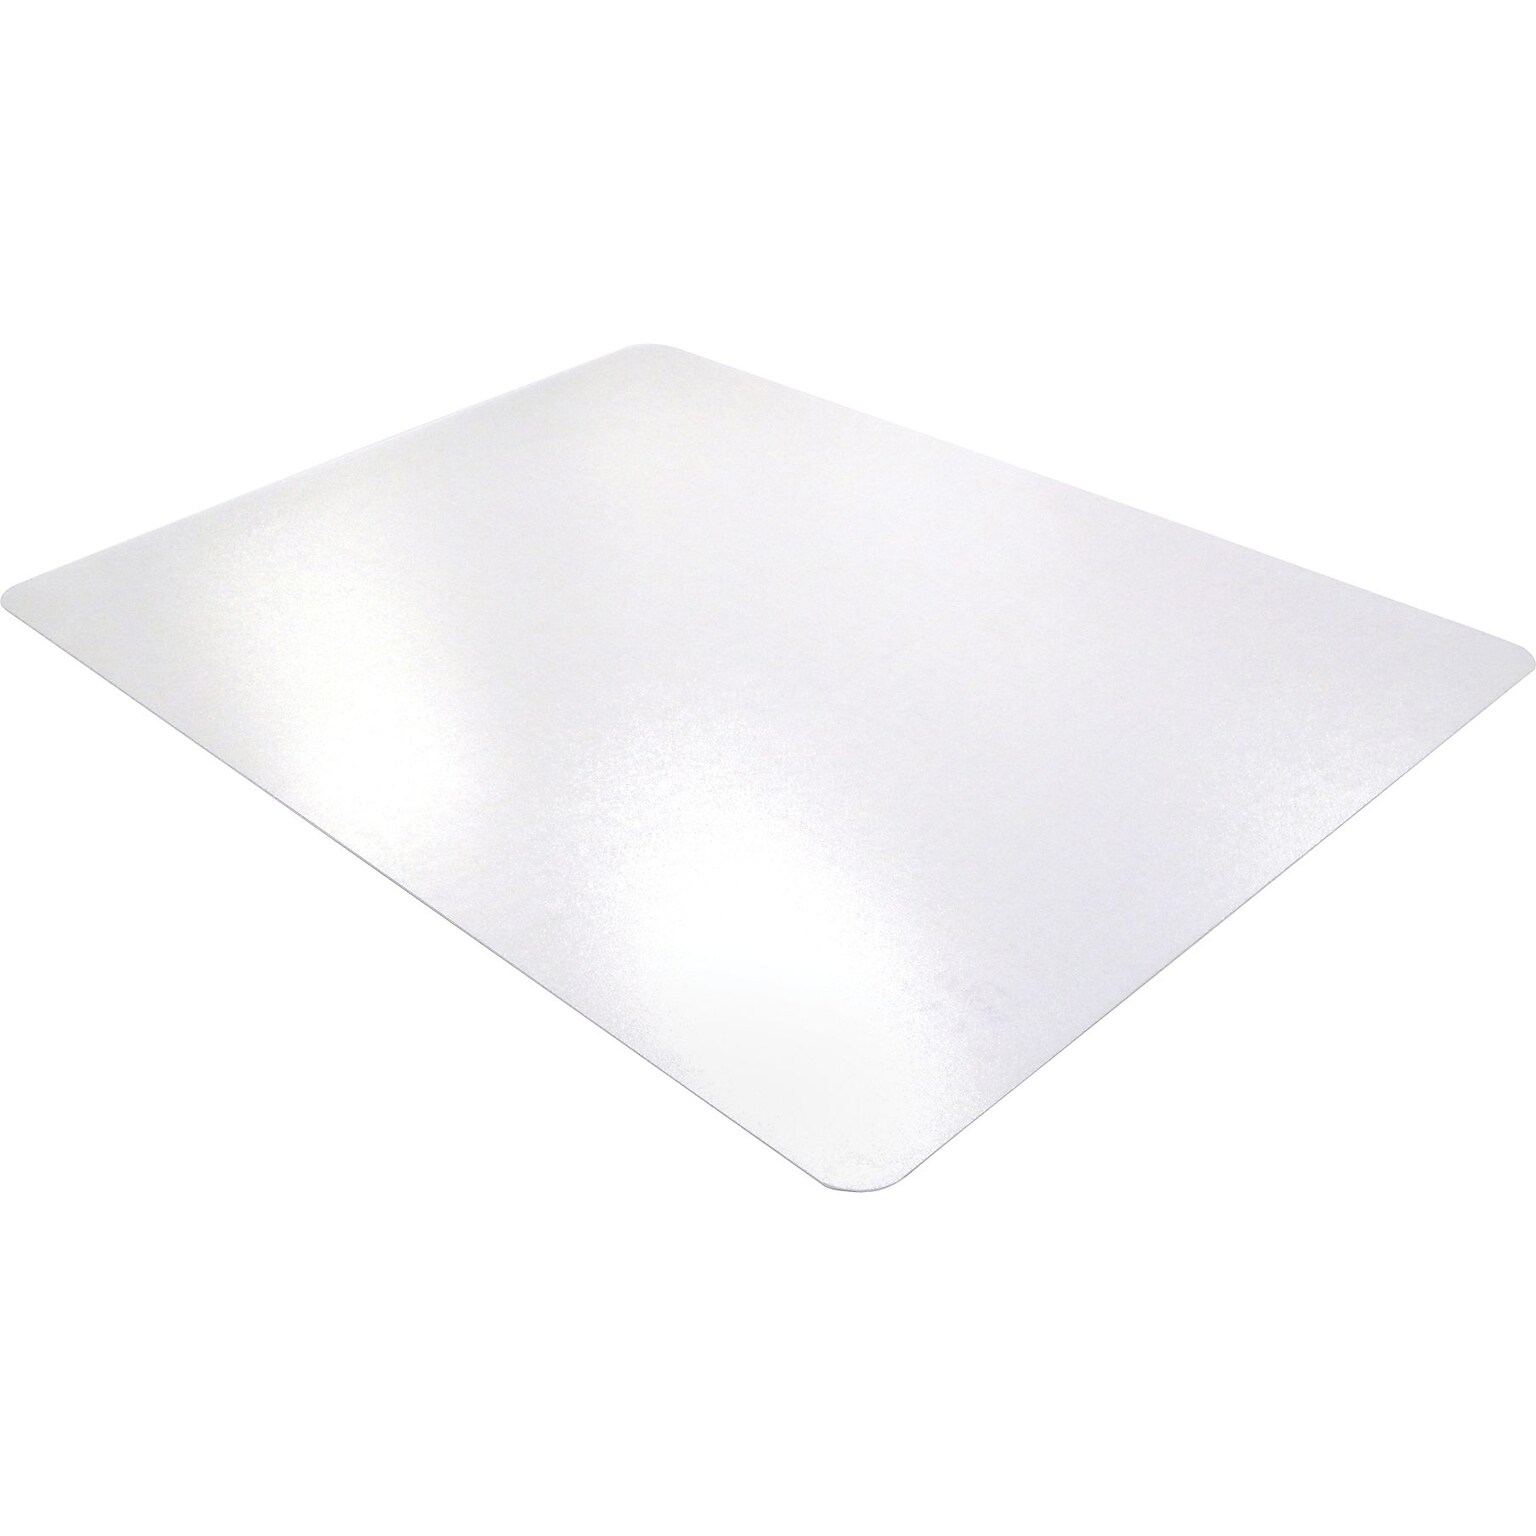 Floortex Desktex Polycarbonate Desk Pad, 24 x 19, Clear, 2/Pack (FPDE1924RA2)